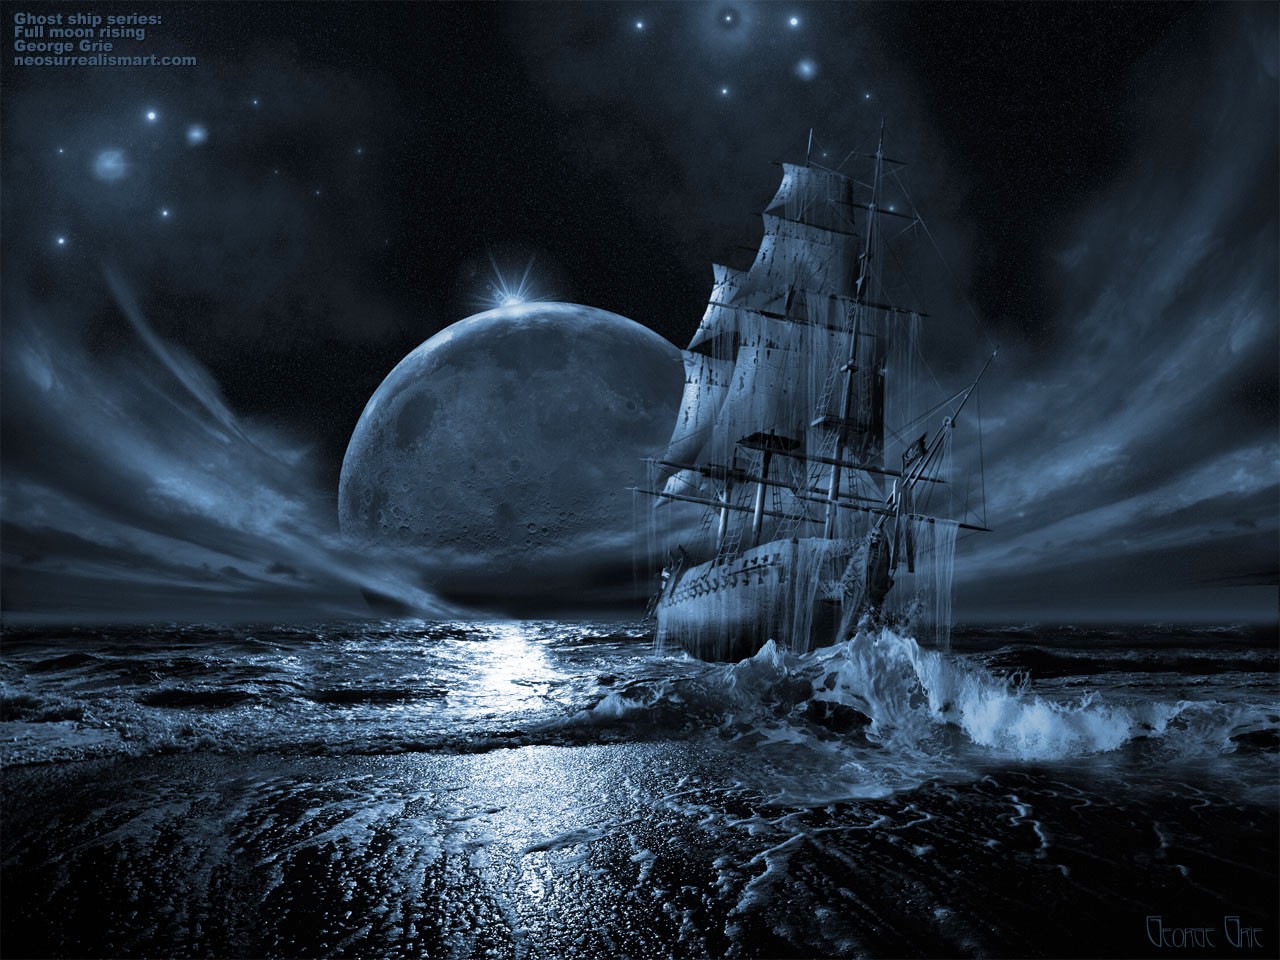 General 1280x960 Moon sailing ship ghost ship fantasy art ship vehicle rigging (ship) digital art watermarked water night sky stars